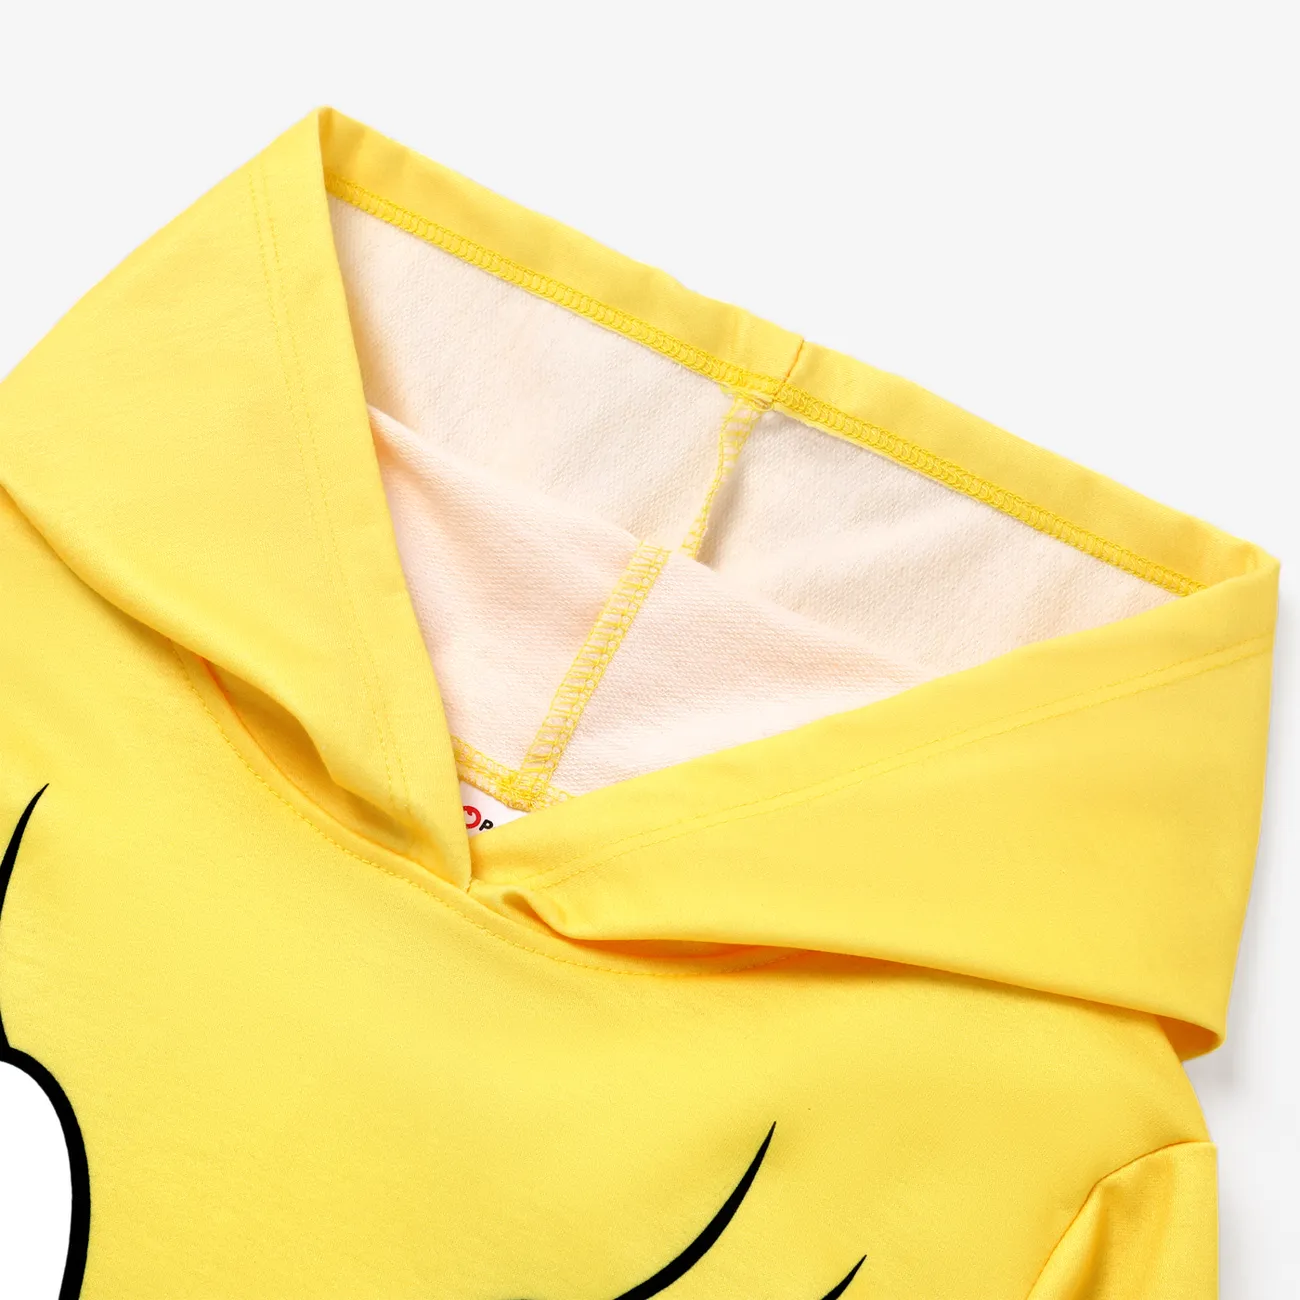 Looney Tunes Páscoa Unissexo Com capuz Infantil Sweatshirt Amarelo big image 1